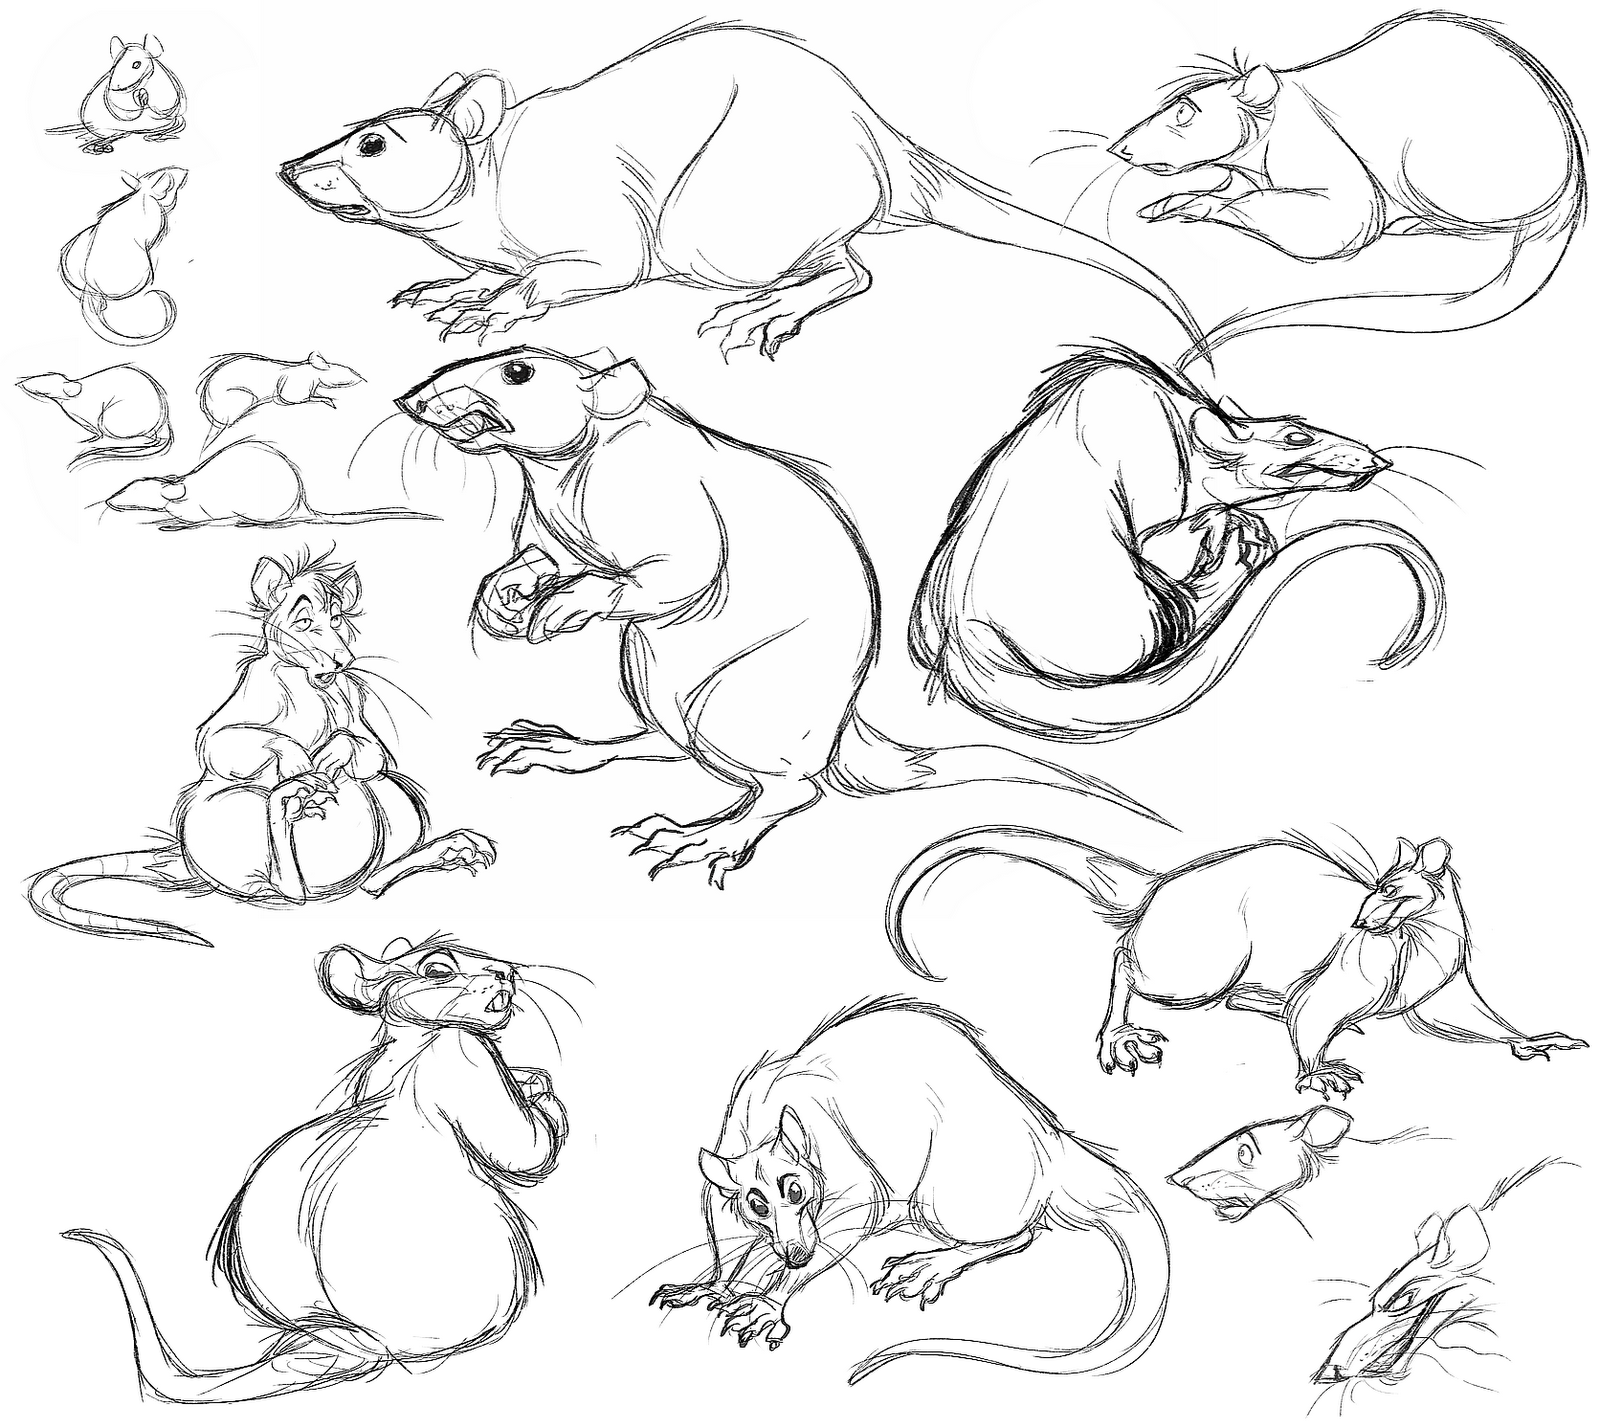 Emone drawing things rats